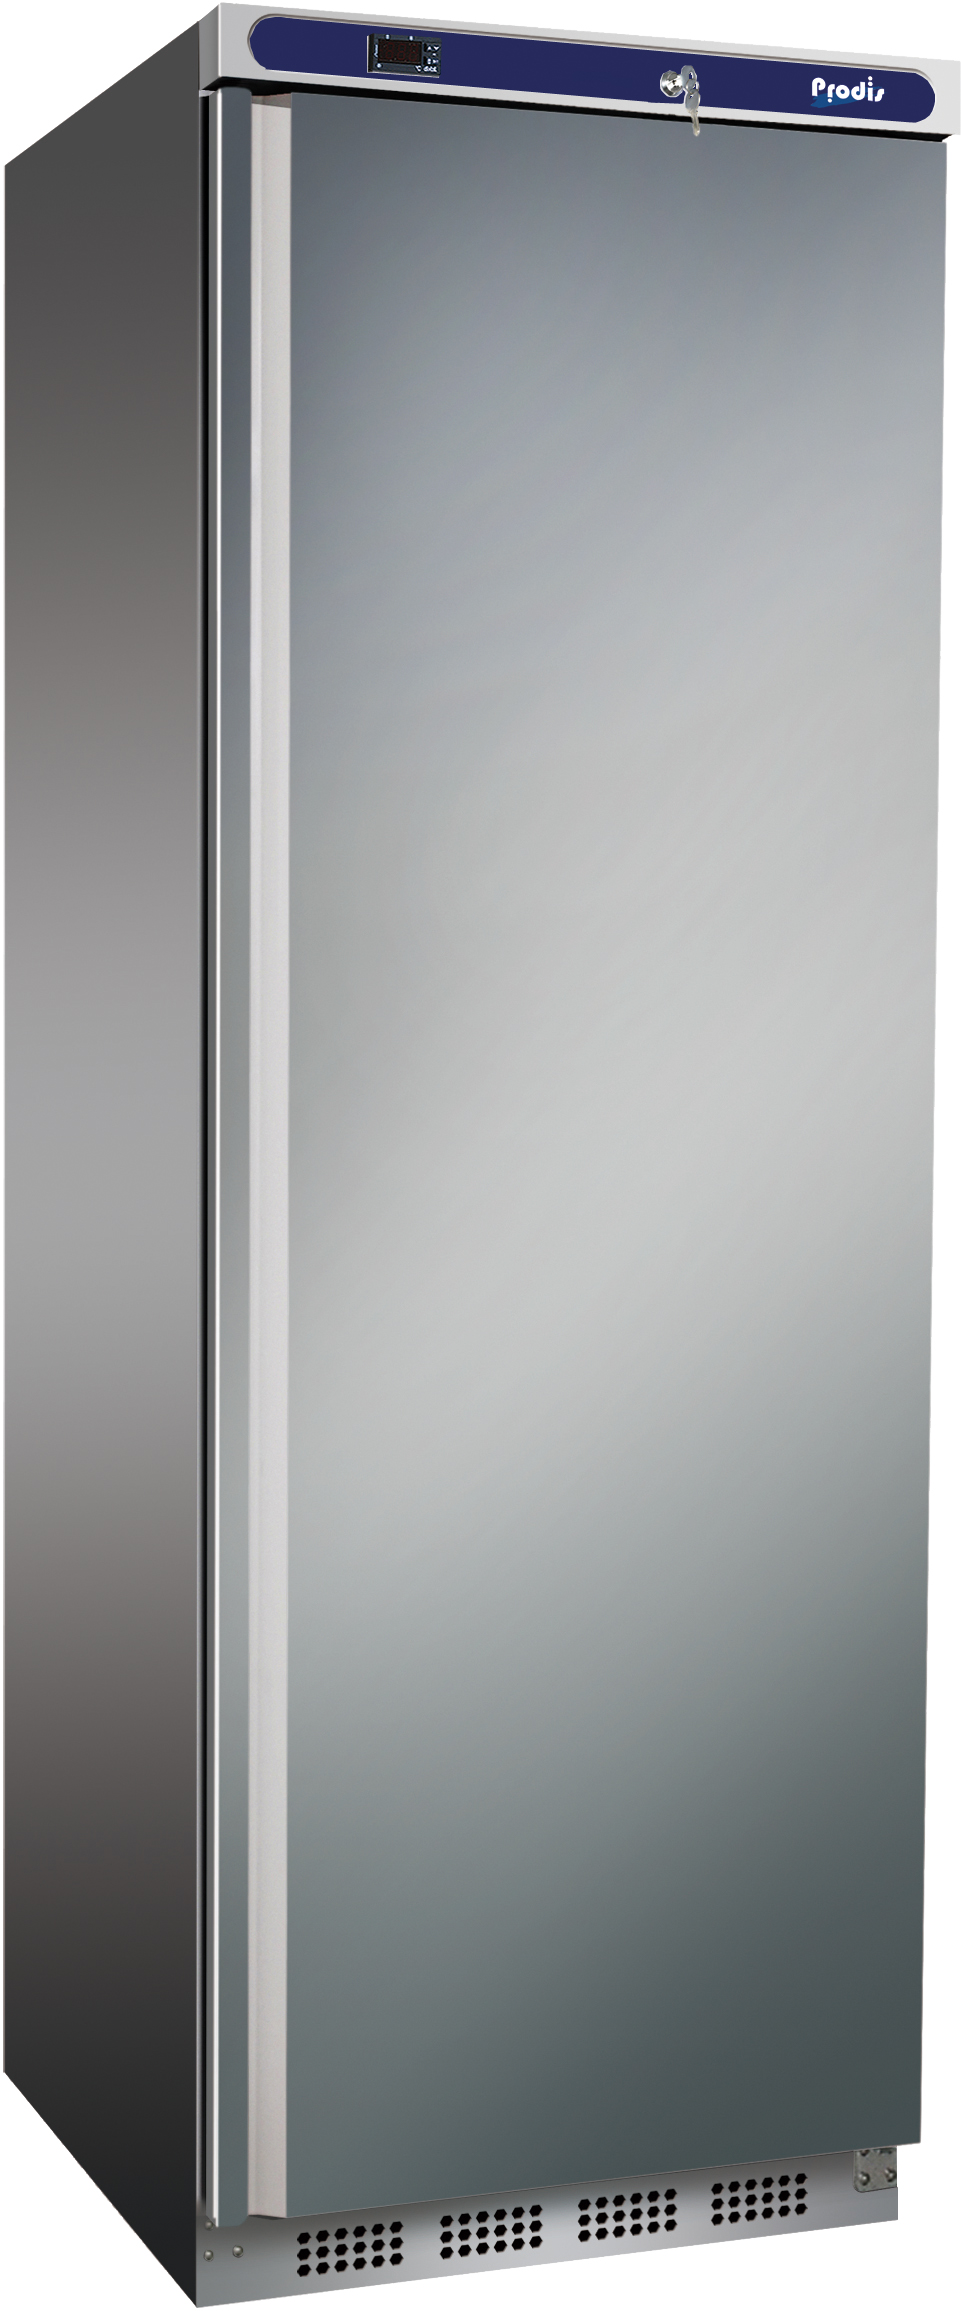 An image of Prodis HC401FSS Stainless Steel Freezer